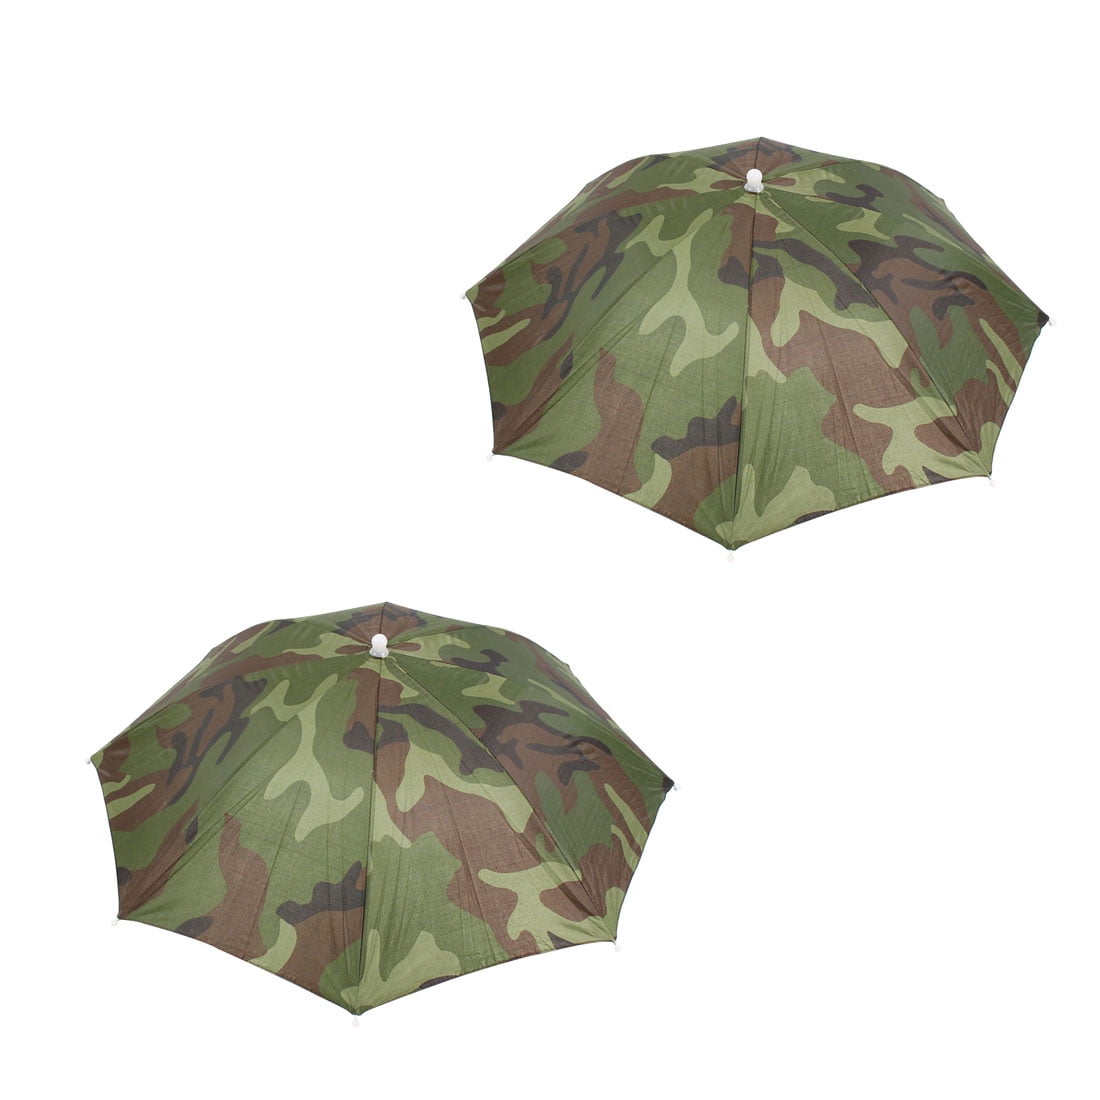 24" Diameter Umbrella Hat Party Fun Novetly Prank Gag Gift Rain Man Costume 